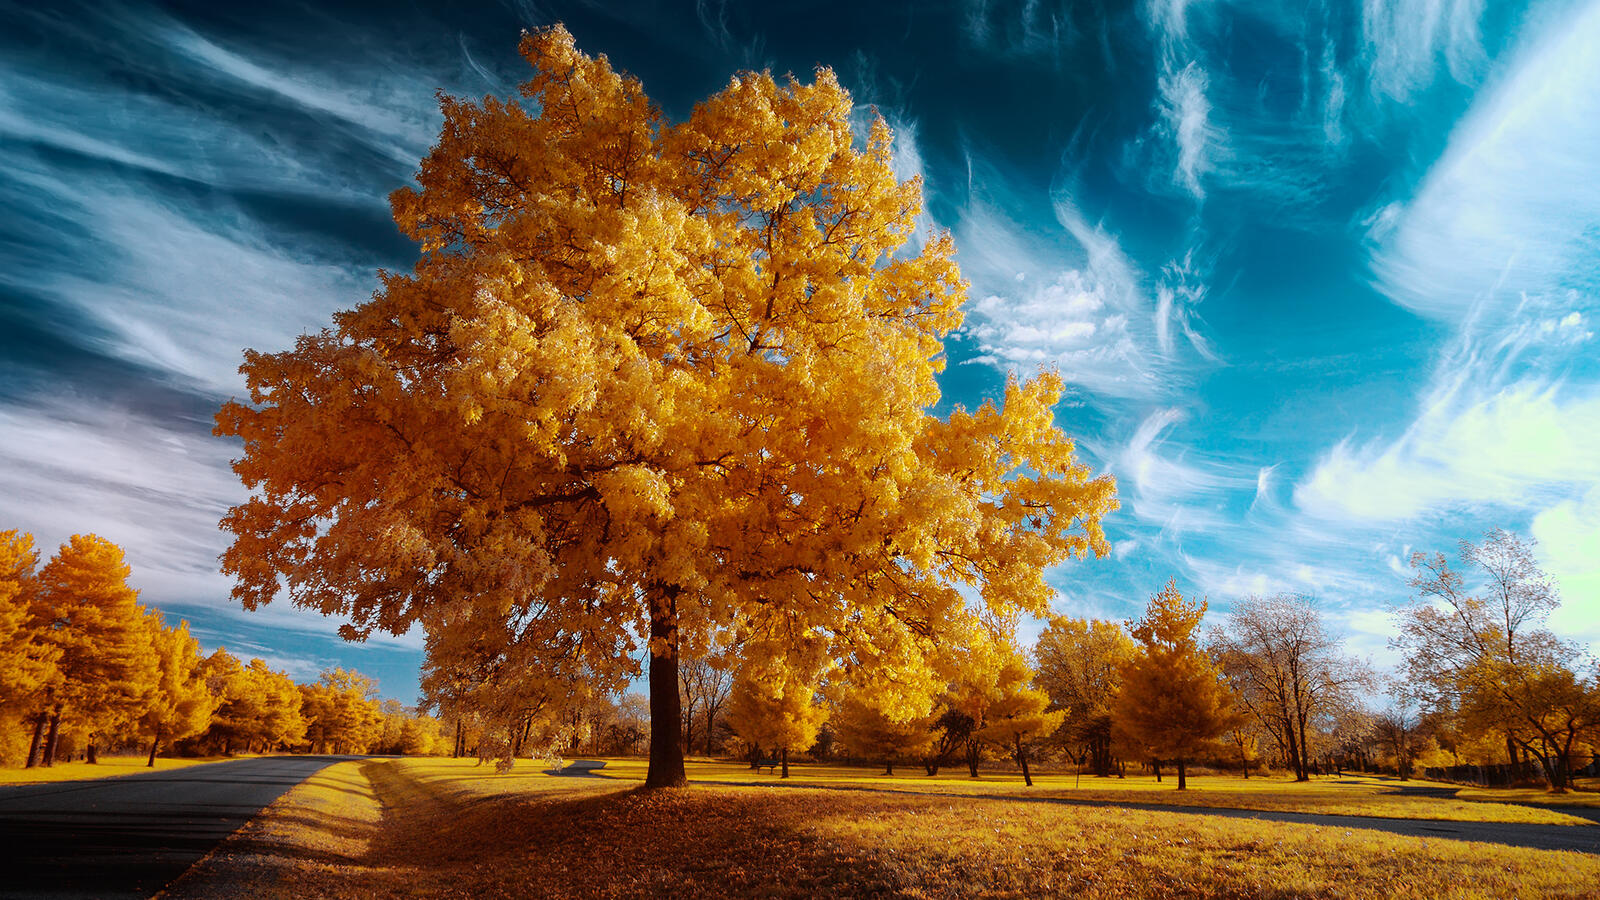 Wallpapers sky autumn landscape on the desktop